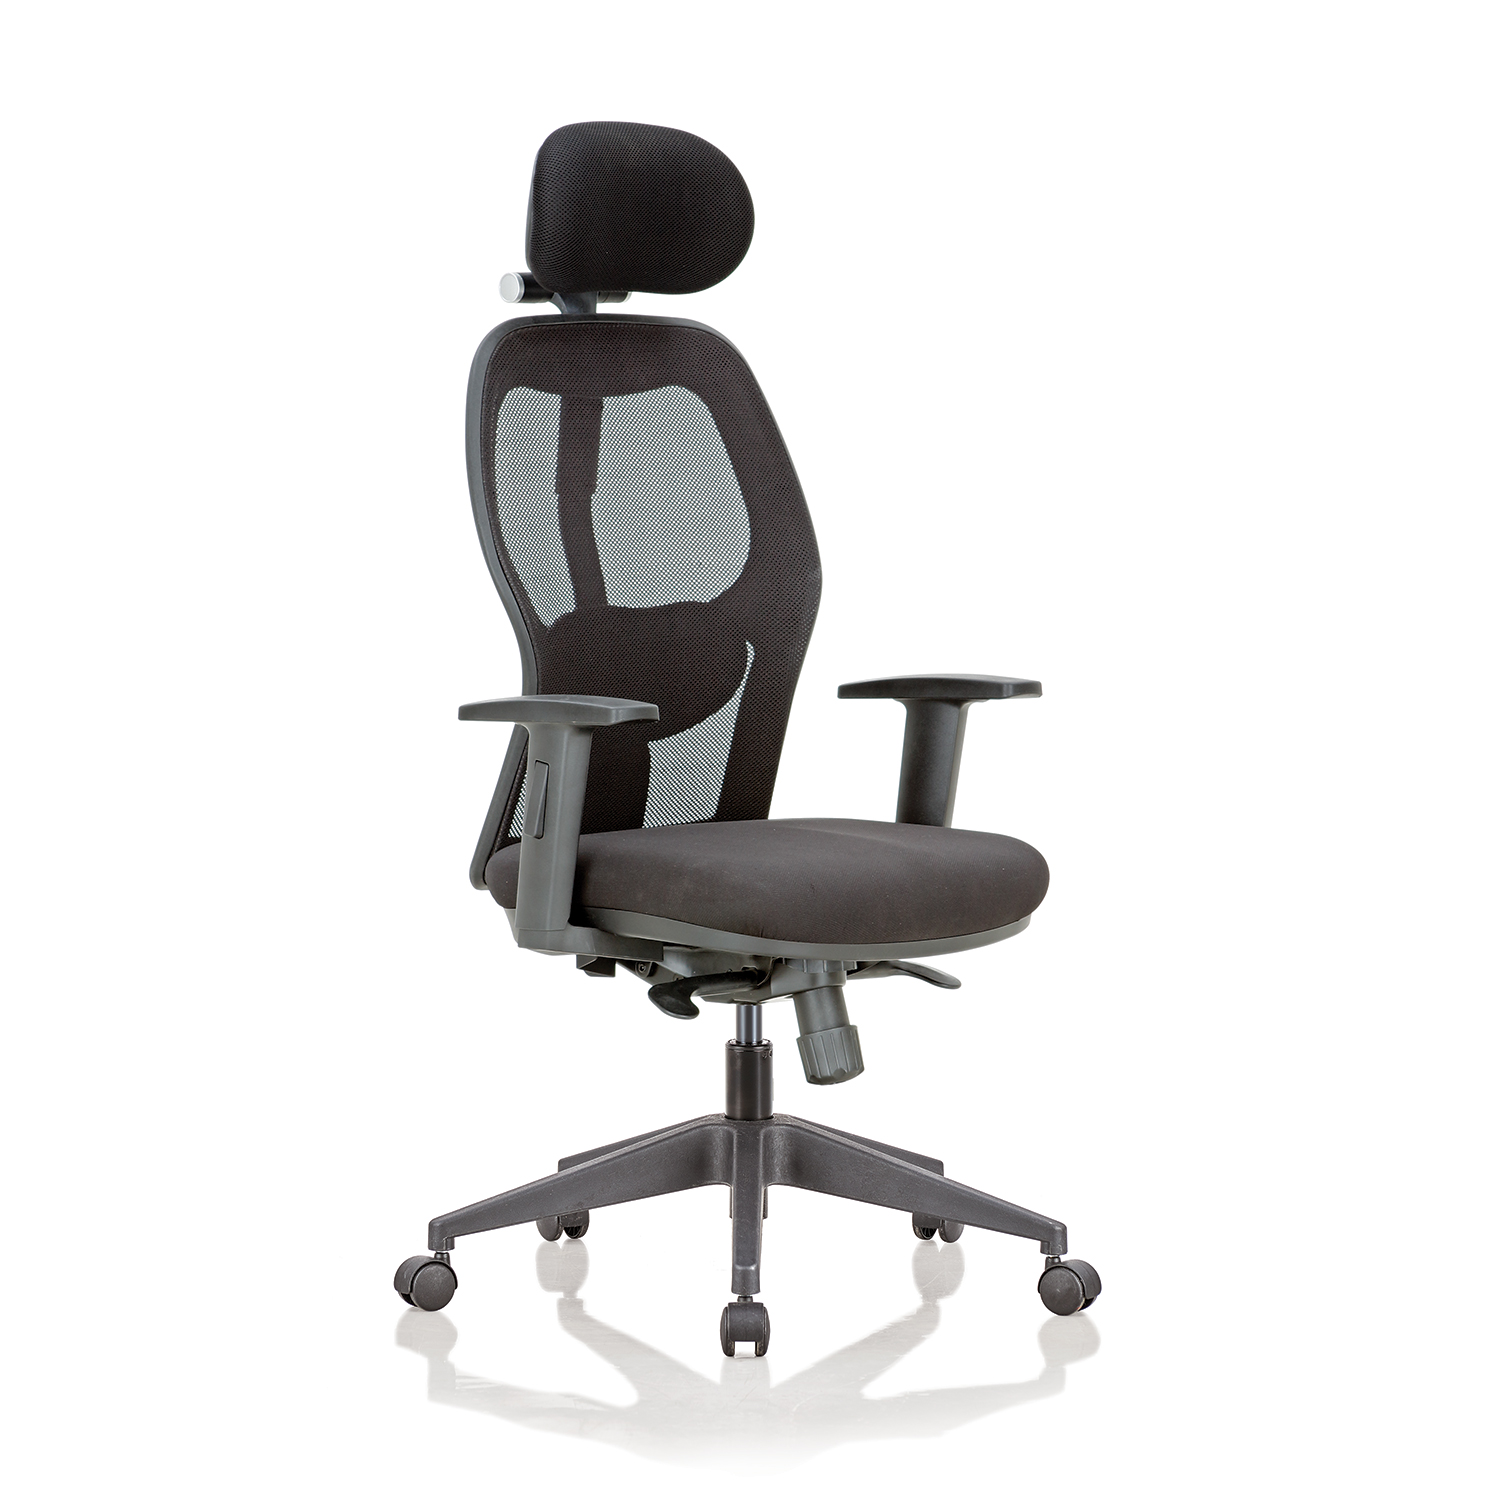 Office chair-Anatom 